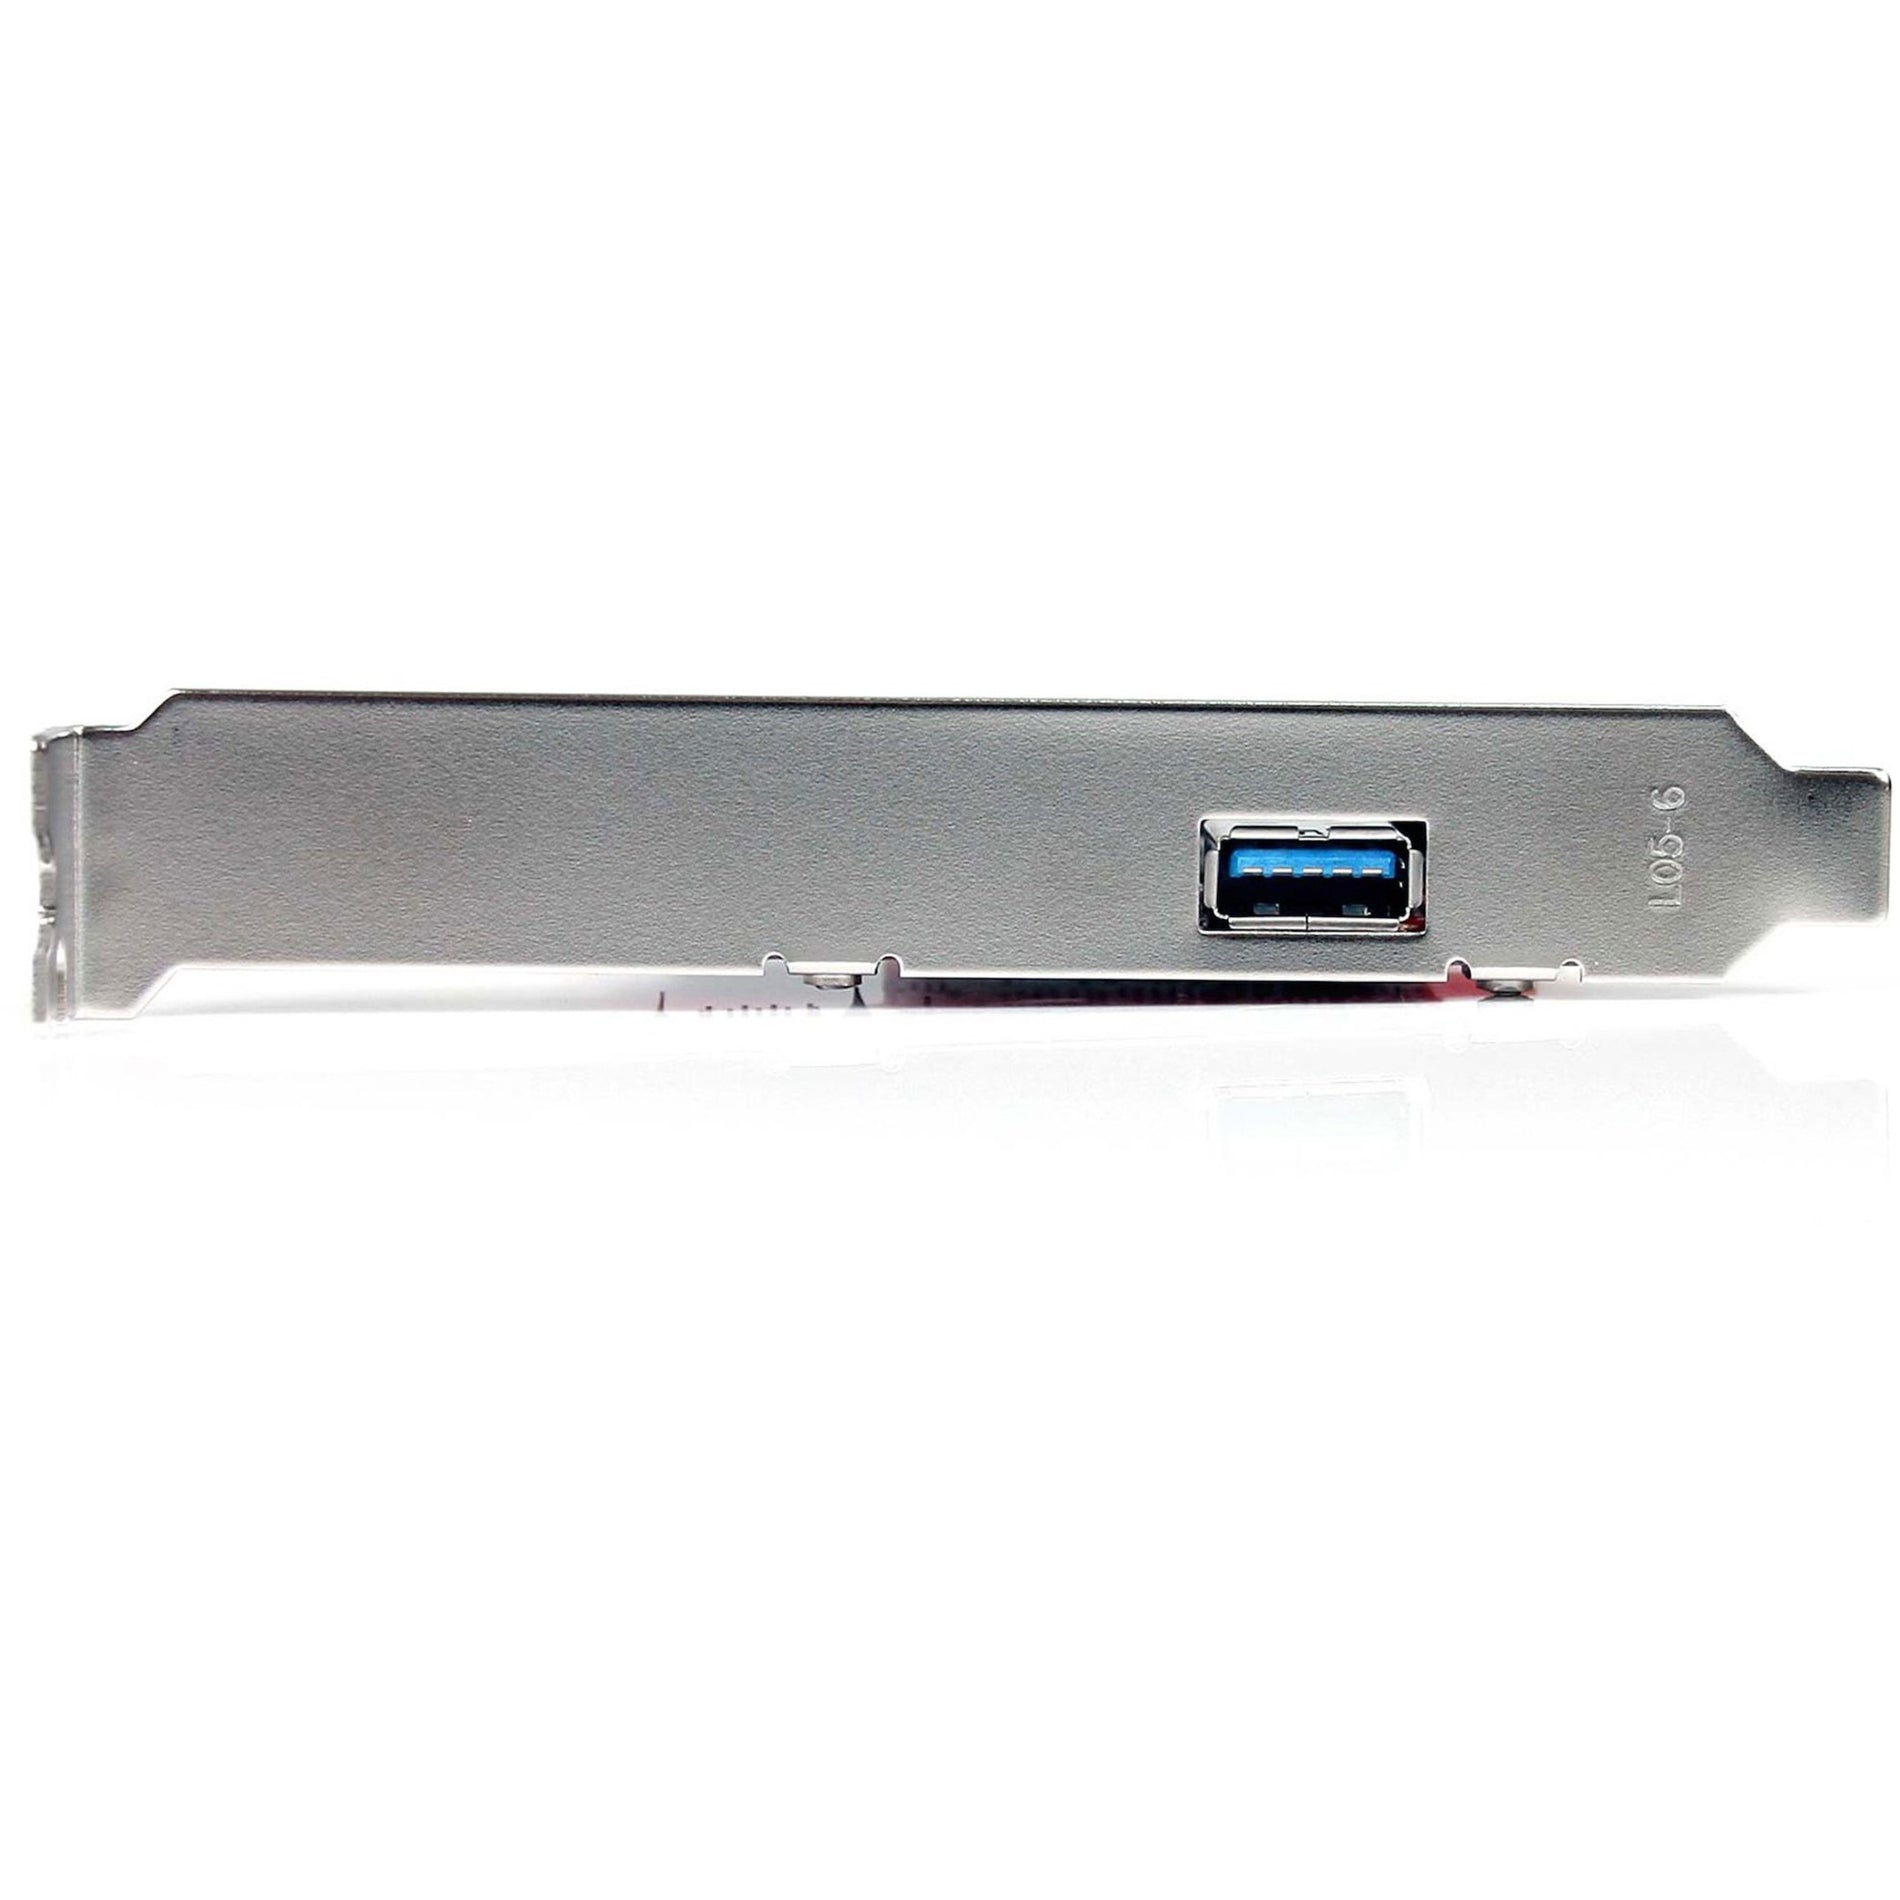 StarTech.com PEXUSB3S11 PCI Express USB 3.0 Card, 2 USB 3.2 Ports, SATA Port, Lifetime Warranty